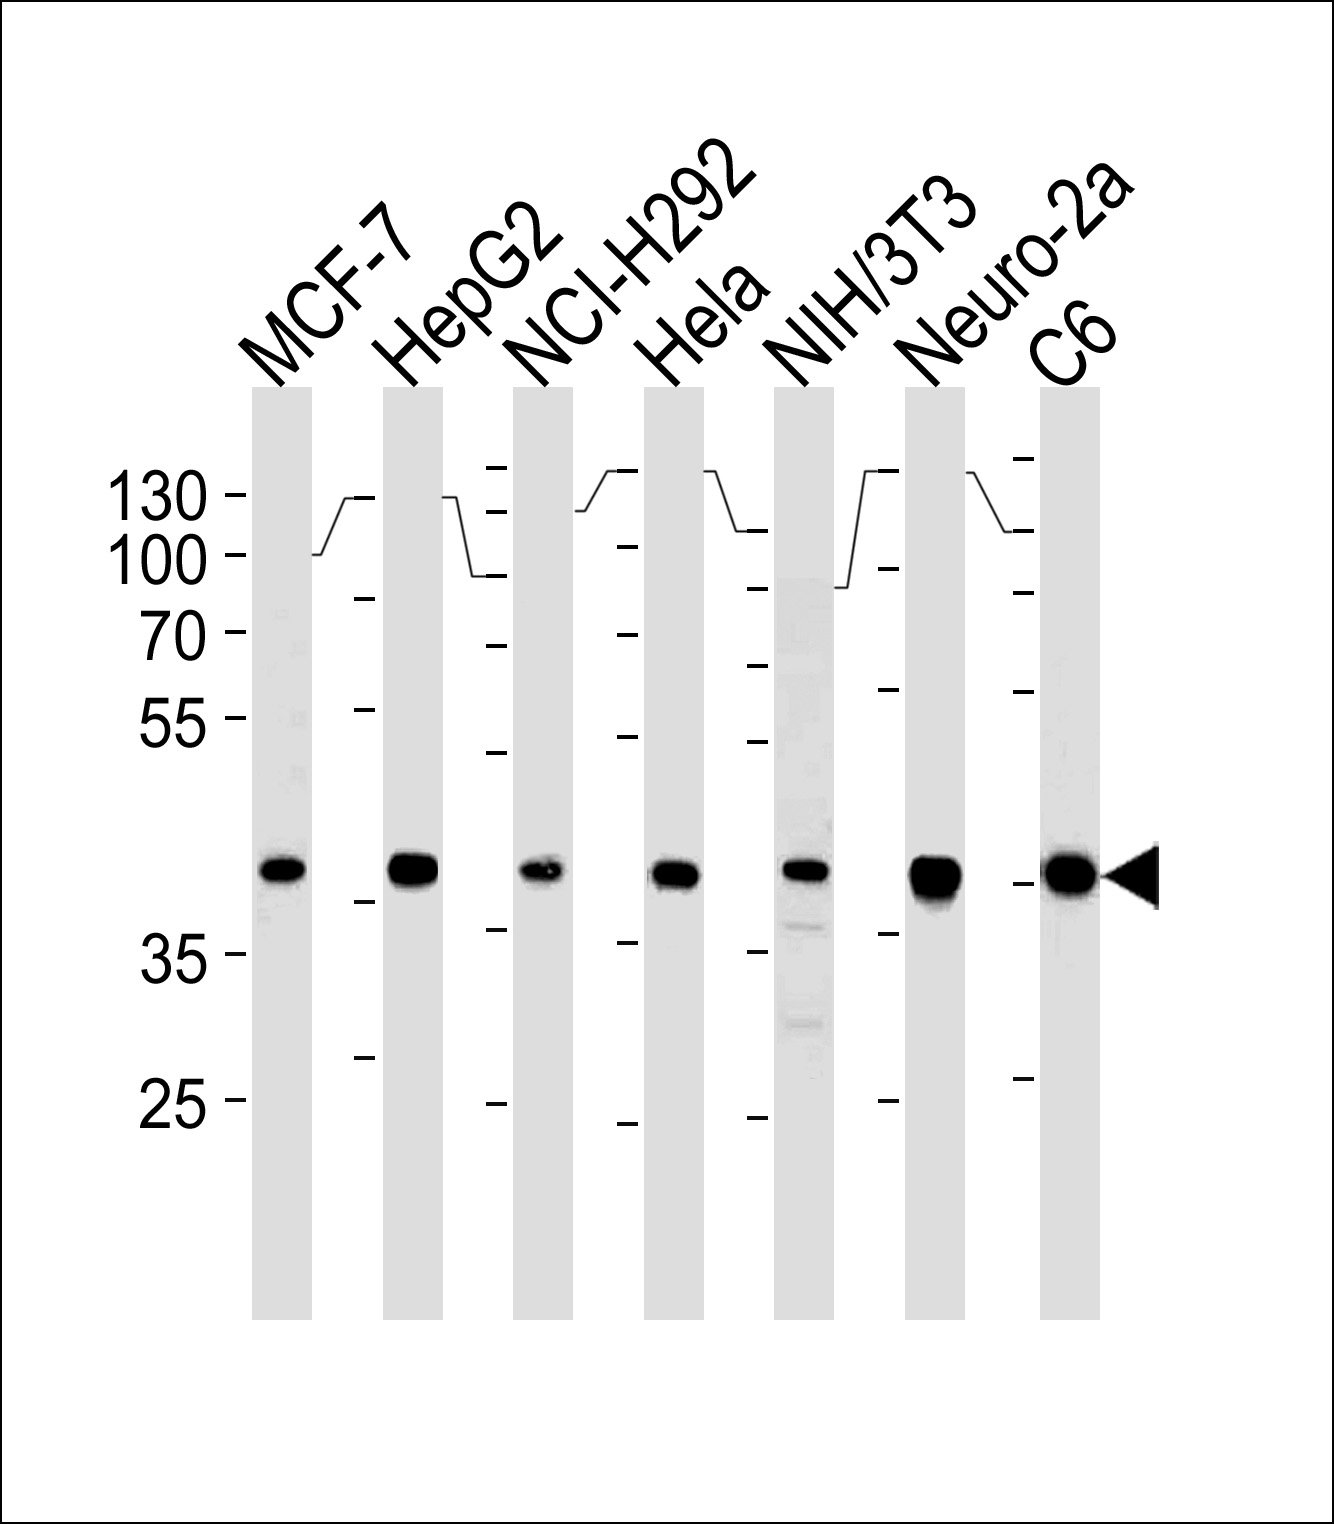 WB - Erk2 Monoclonal Antibody [Knockout Validated] AW5701-U100